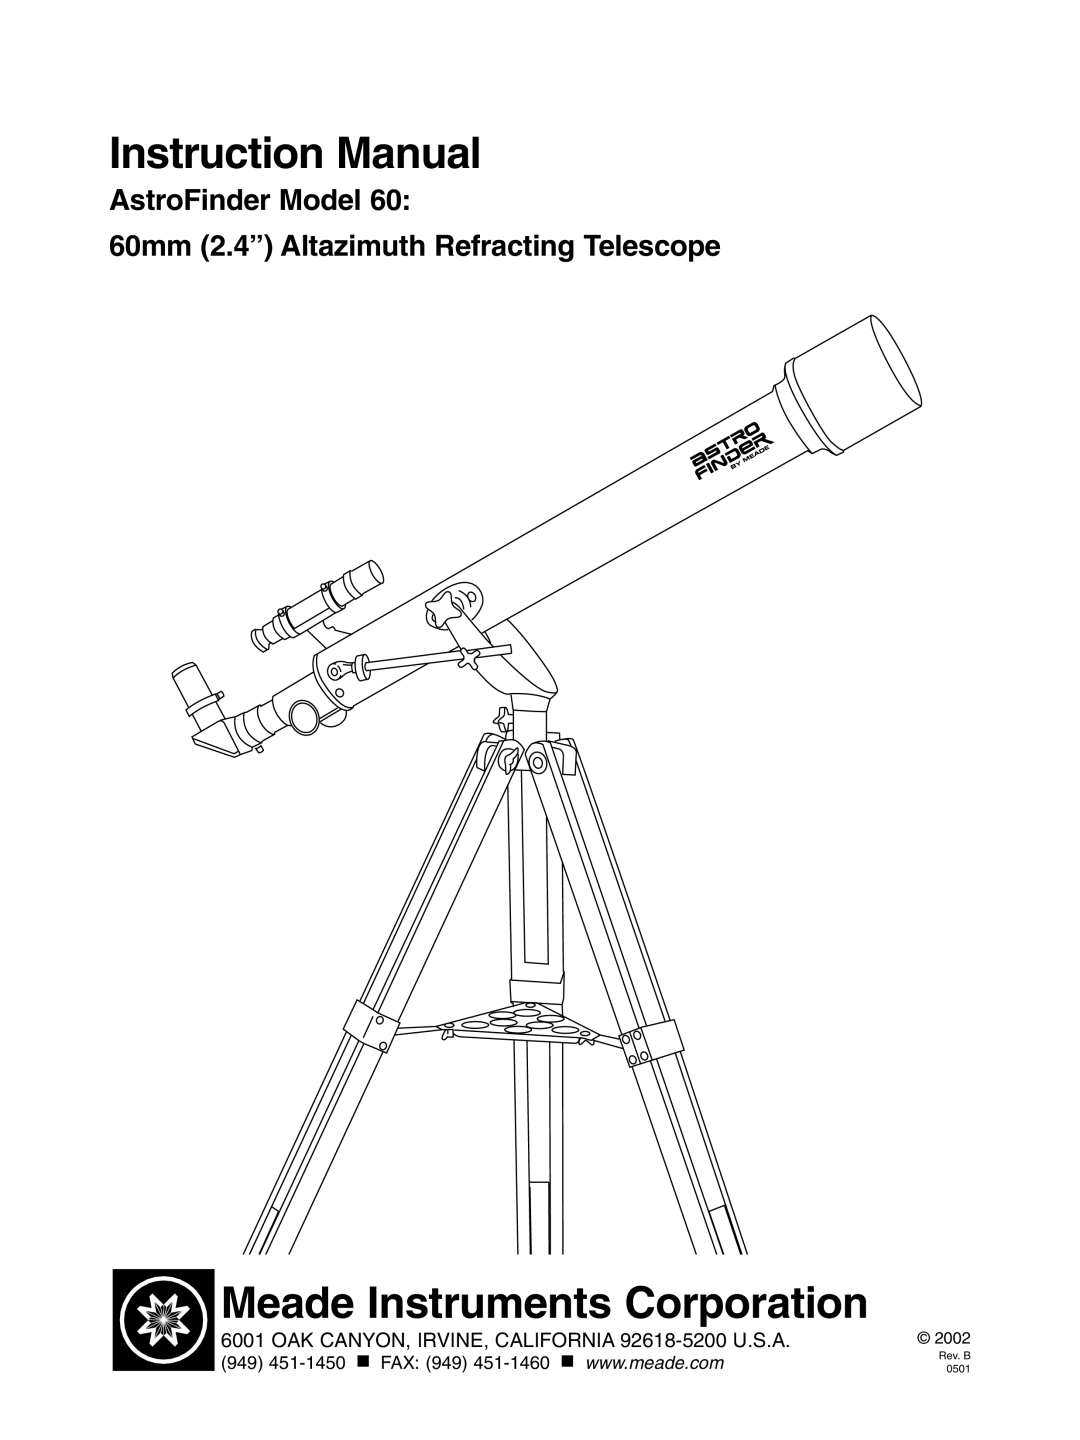 Meade instruction manual Meade Instruments Corporation, AstroFinder Model, 60mm 2.4” Altazimuth Refracting Telescope 